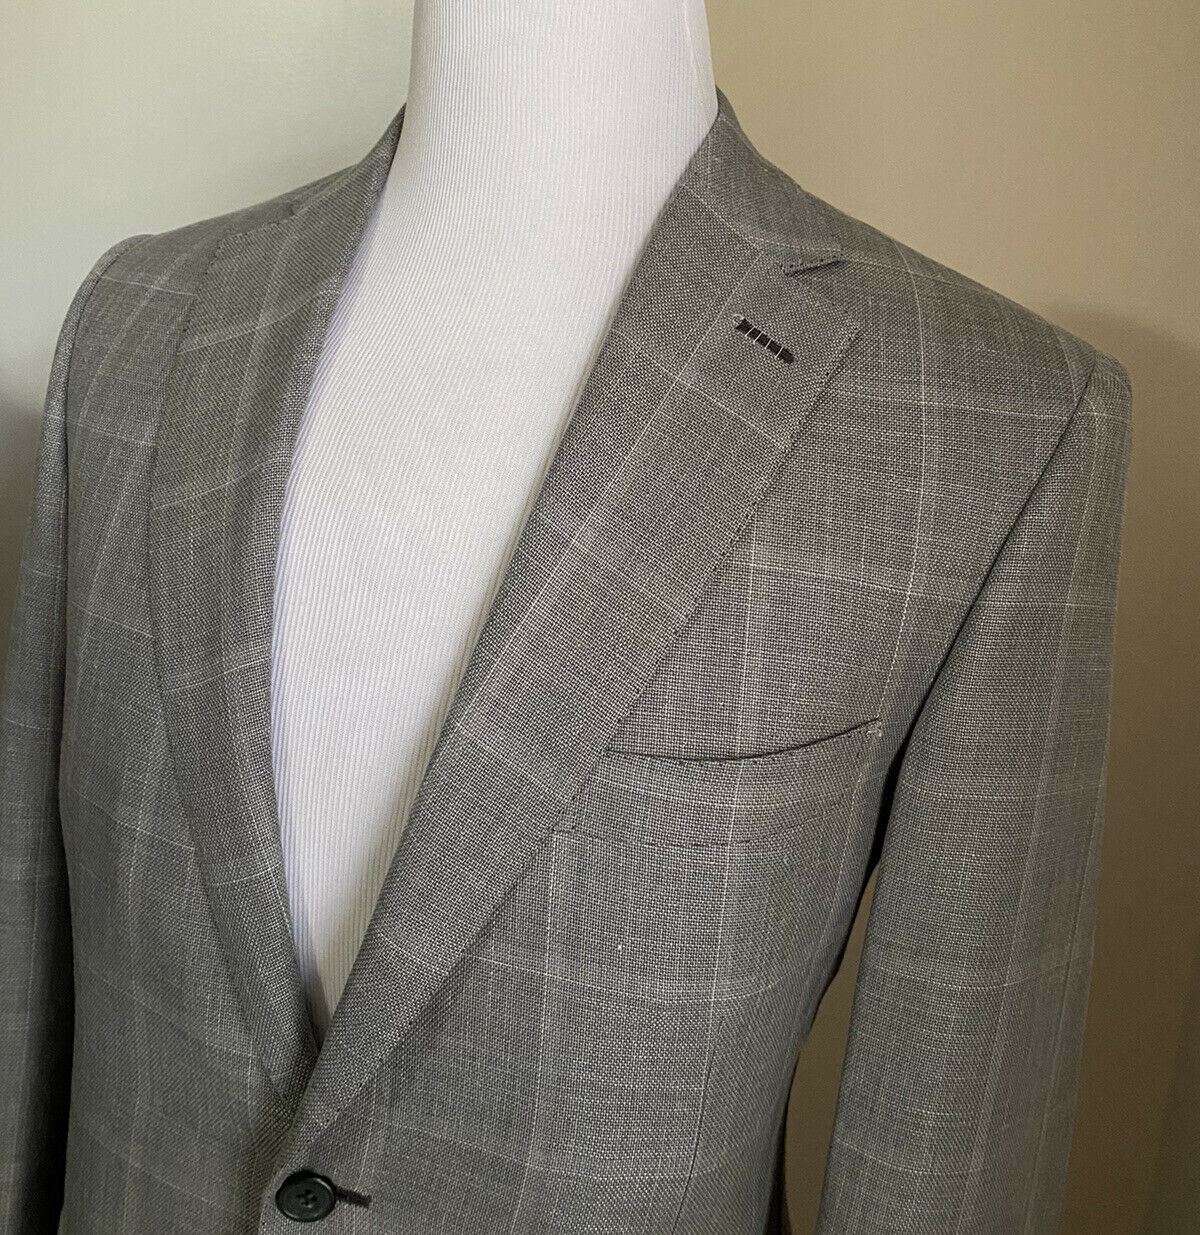 NWT $5900 Brioni Men’s Wool Sport Coat Blazer Jacket Gray 40R US/50R Eu Italy